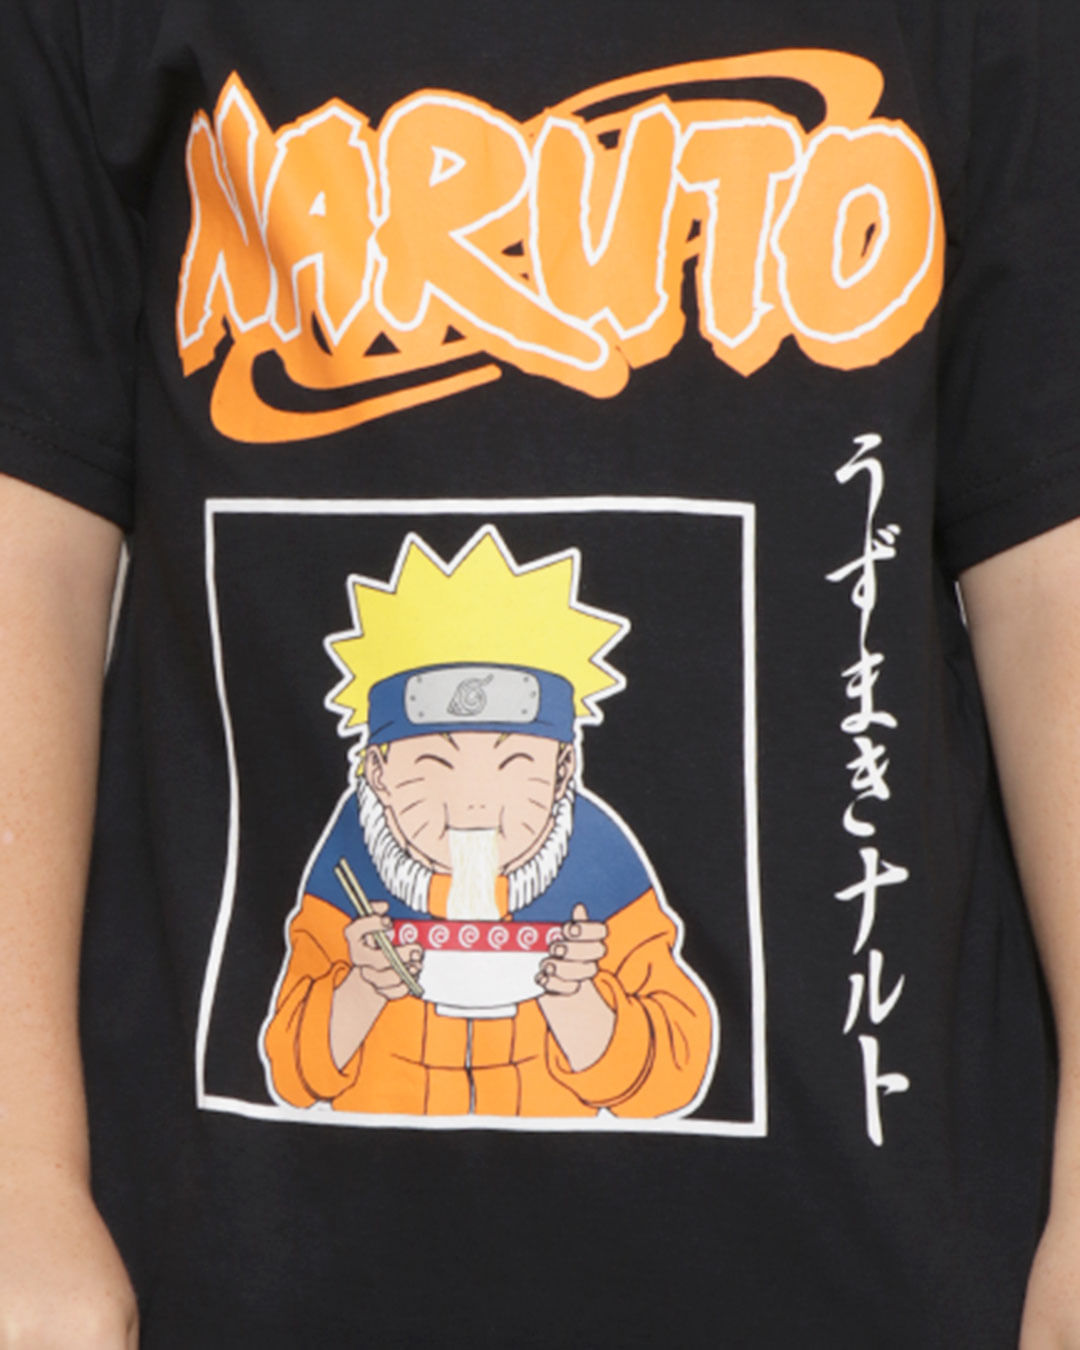 Camiseta-Infantil-Estampa-Naruto-Preta